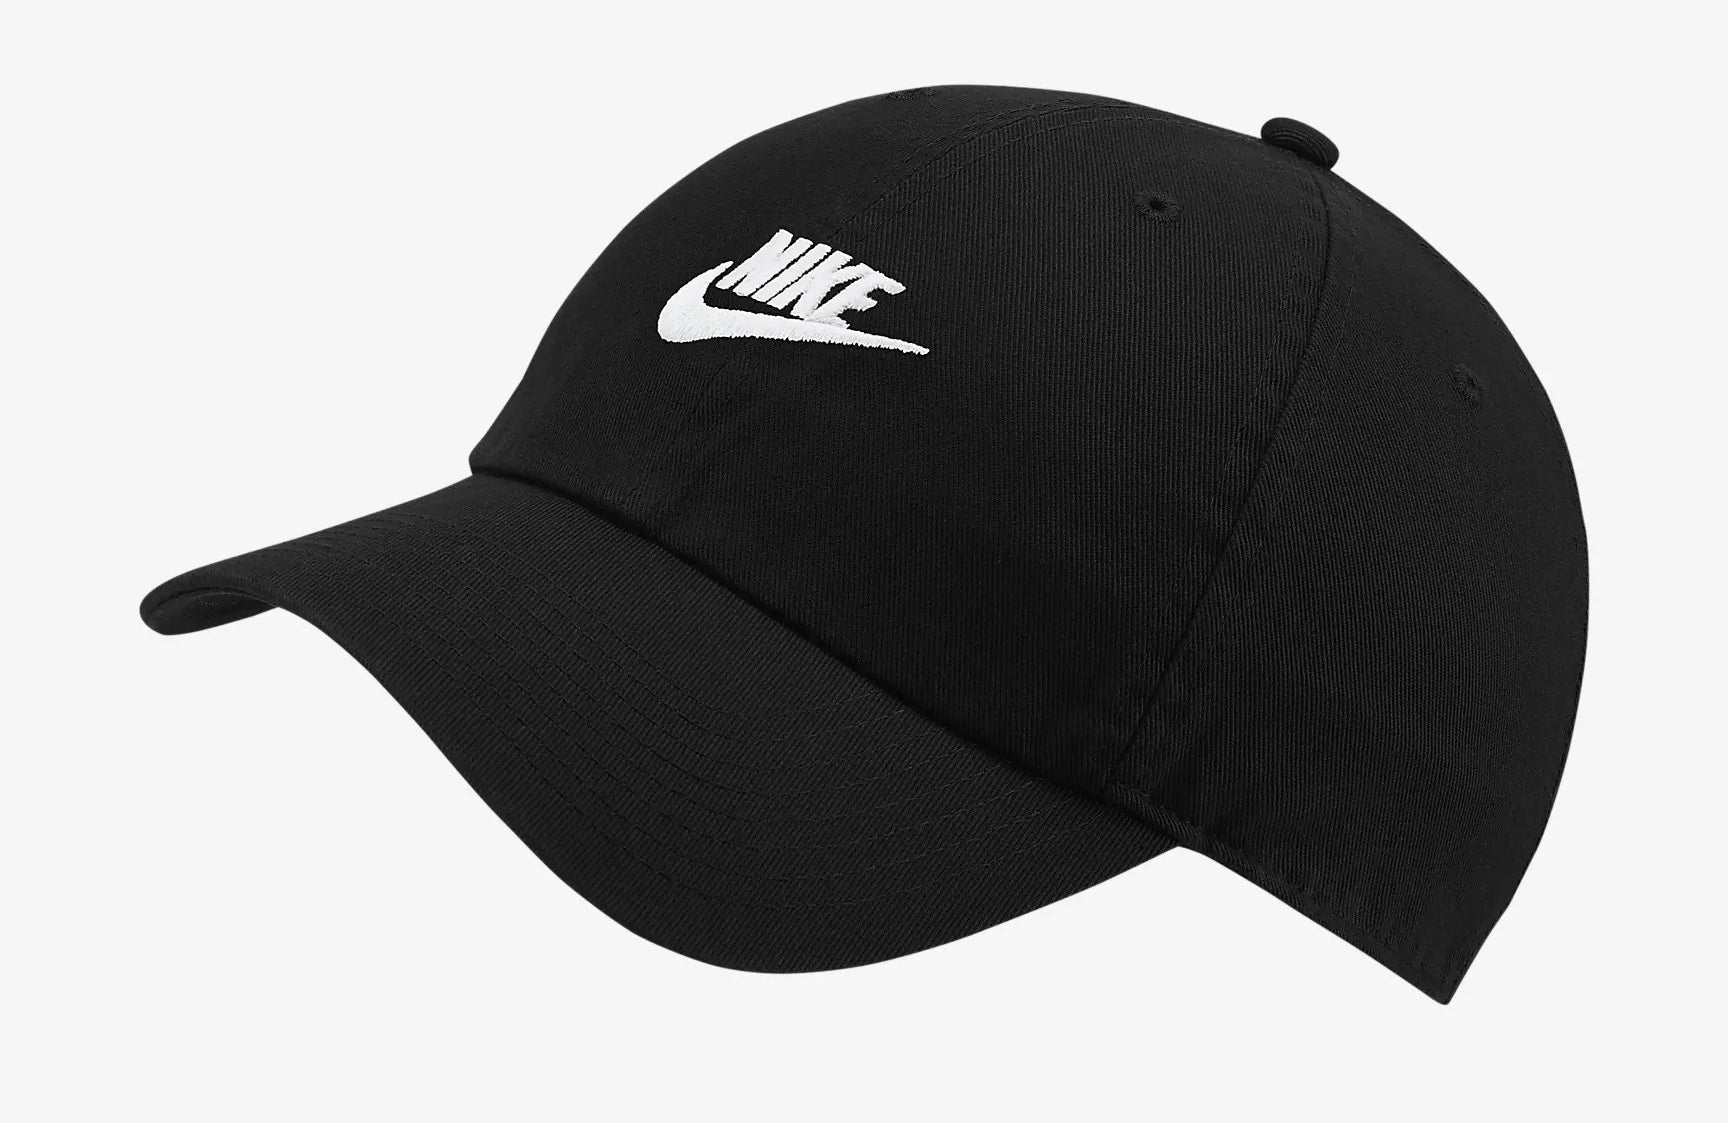 A black baseball hat with Nike logo